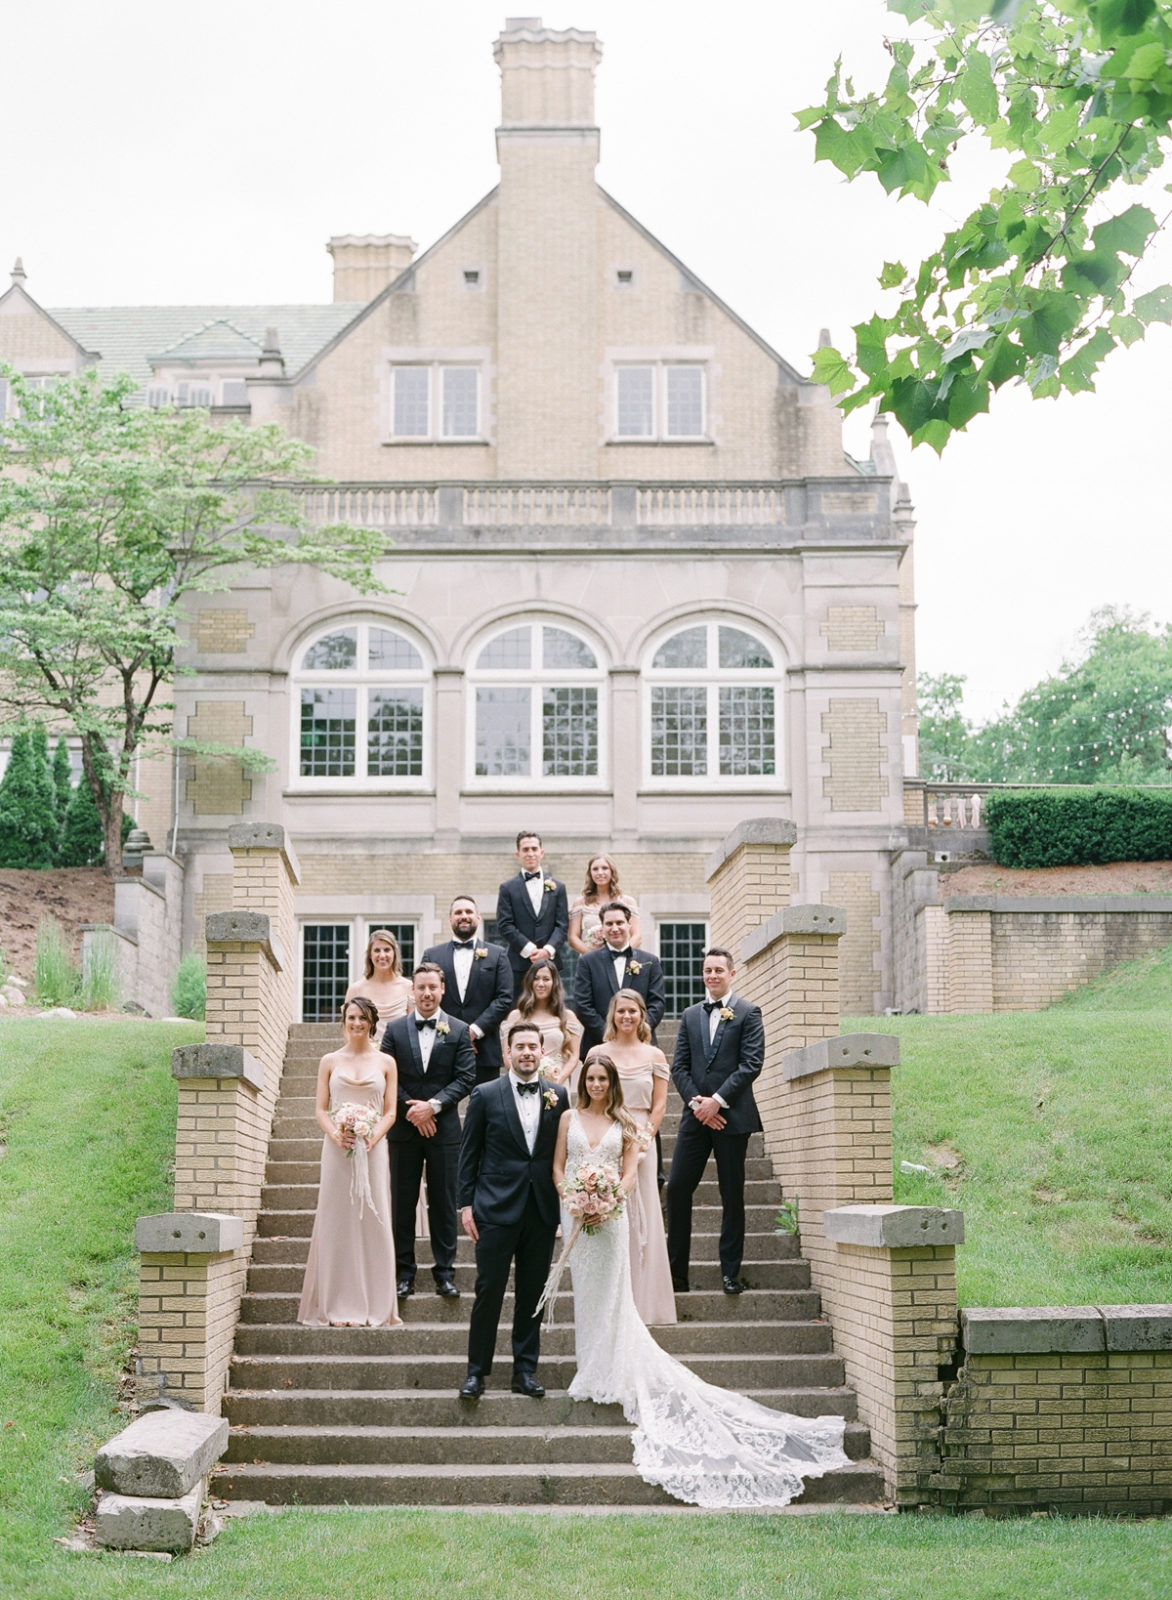 Laurel Hall Wedding Photos | Molly Carr Photography | Fine Art Film Photographer | Chicago Wedding | Summer Garden Party Wedding | European Wedding Inspiration | Bridal Party